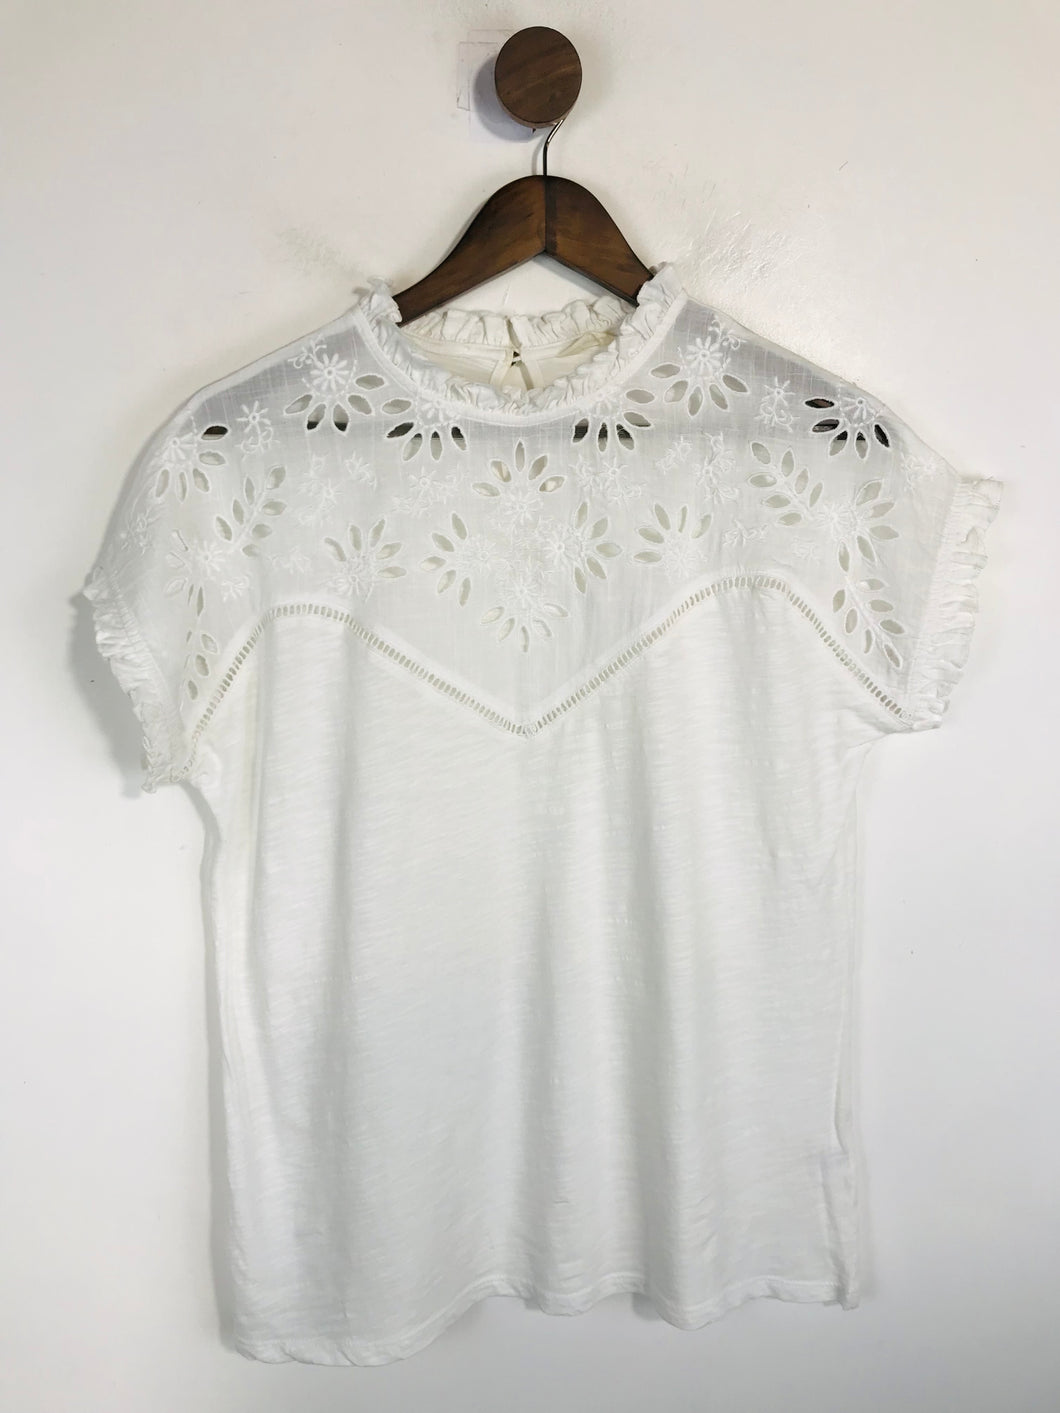 Hush Women's Embroidered Ruffle Blouse | M UK10-12 | White